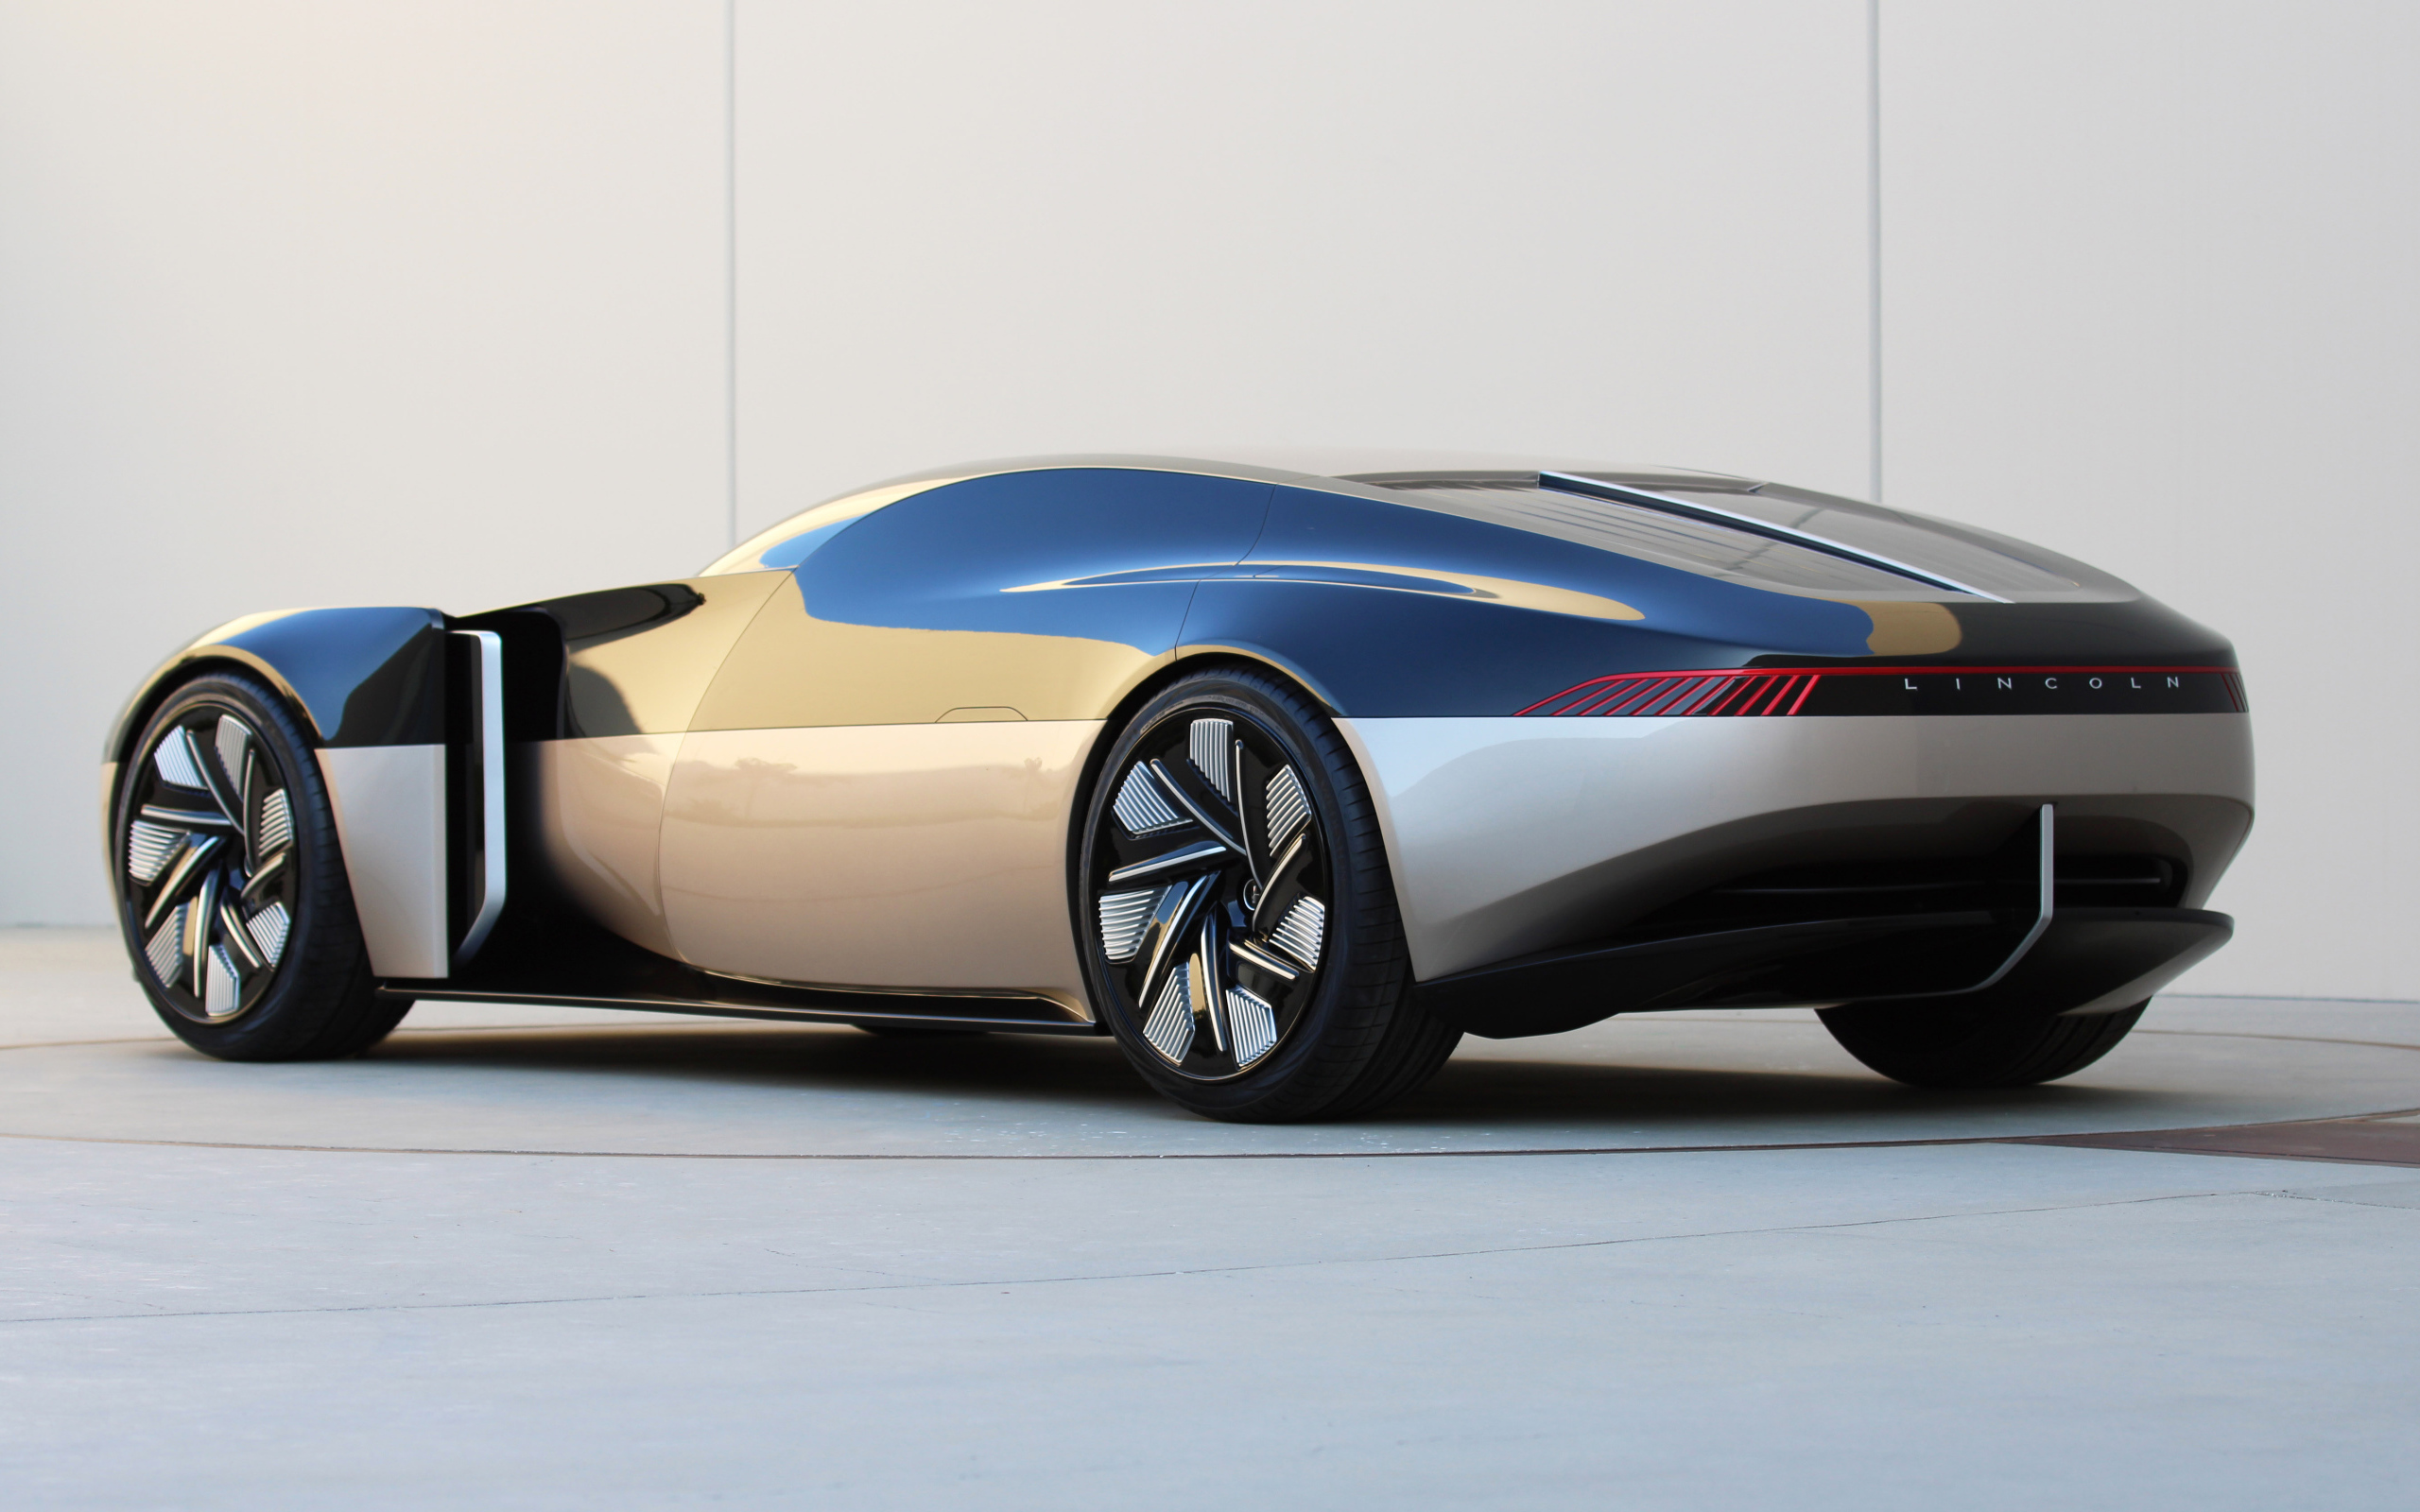 Автомобиль Lincoln Anniversary Concept 2021 года вид сзади